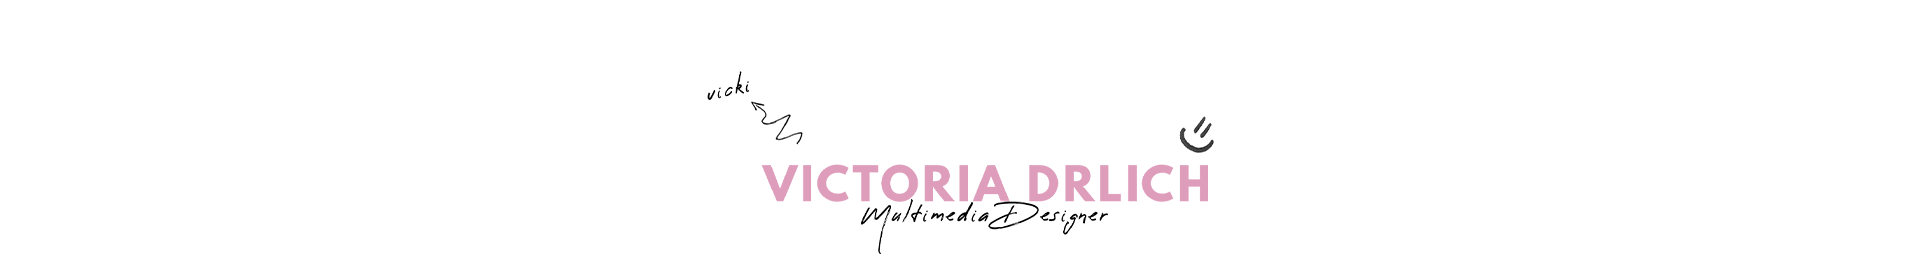 Banner de perfil de Victoria Drlich